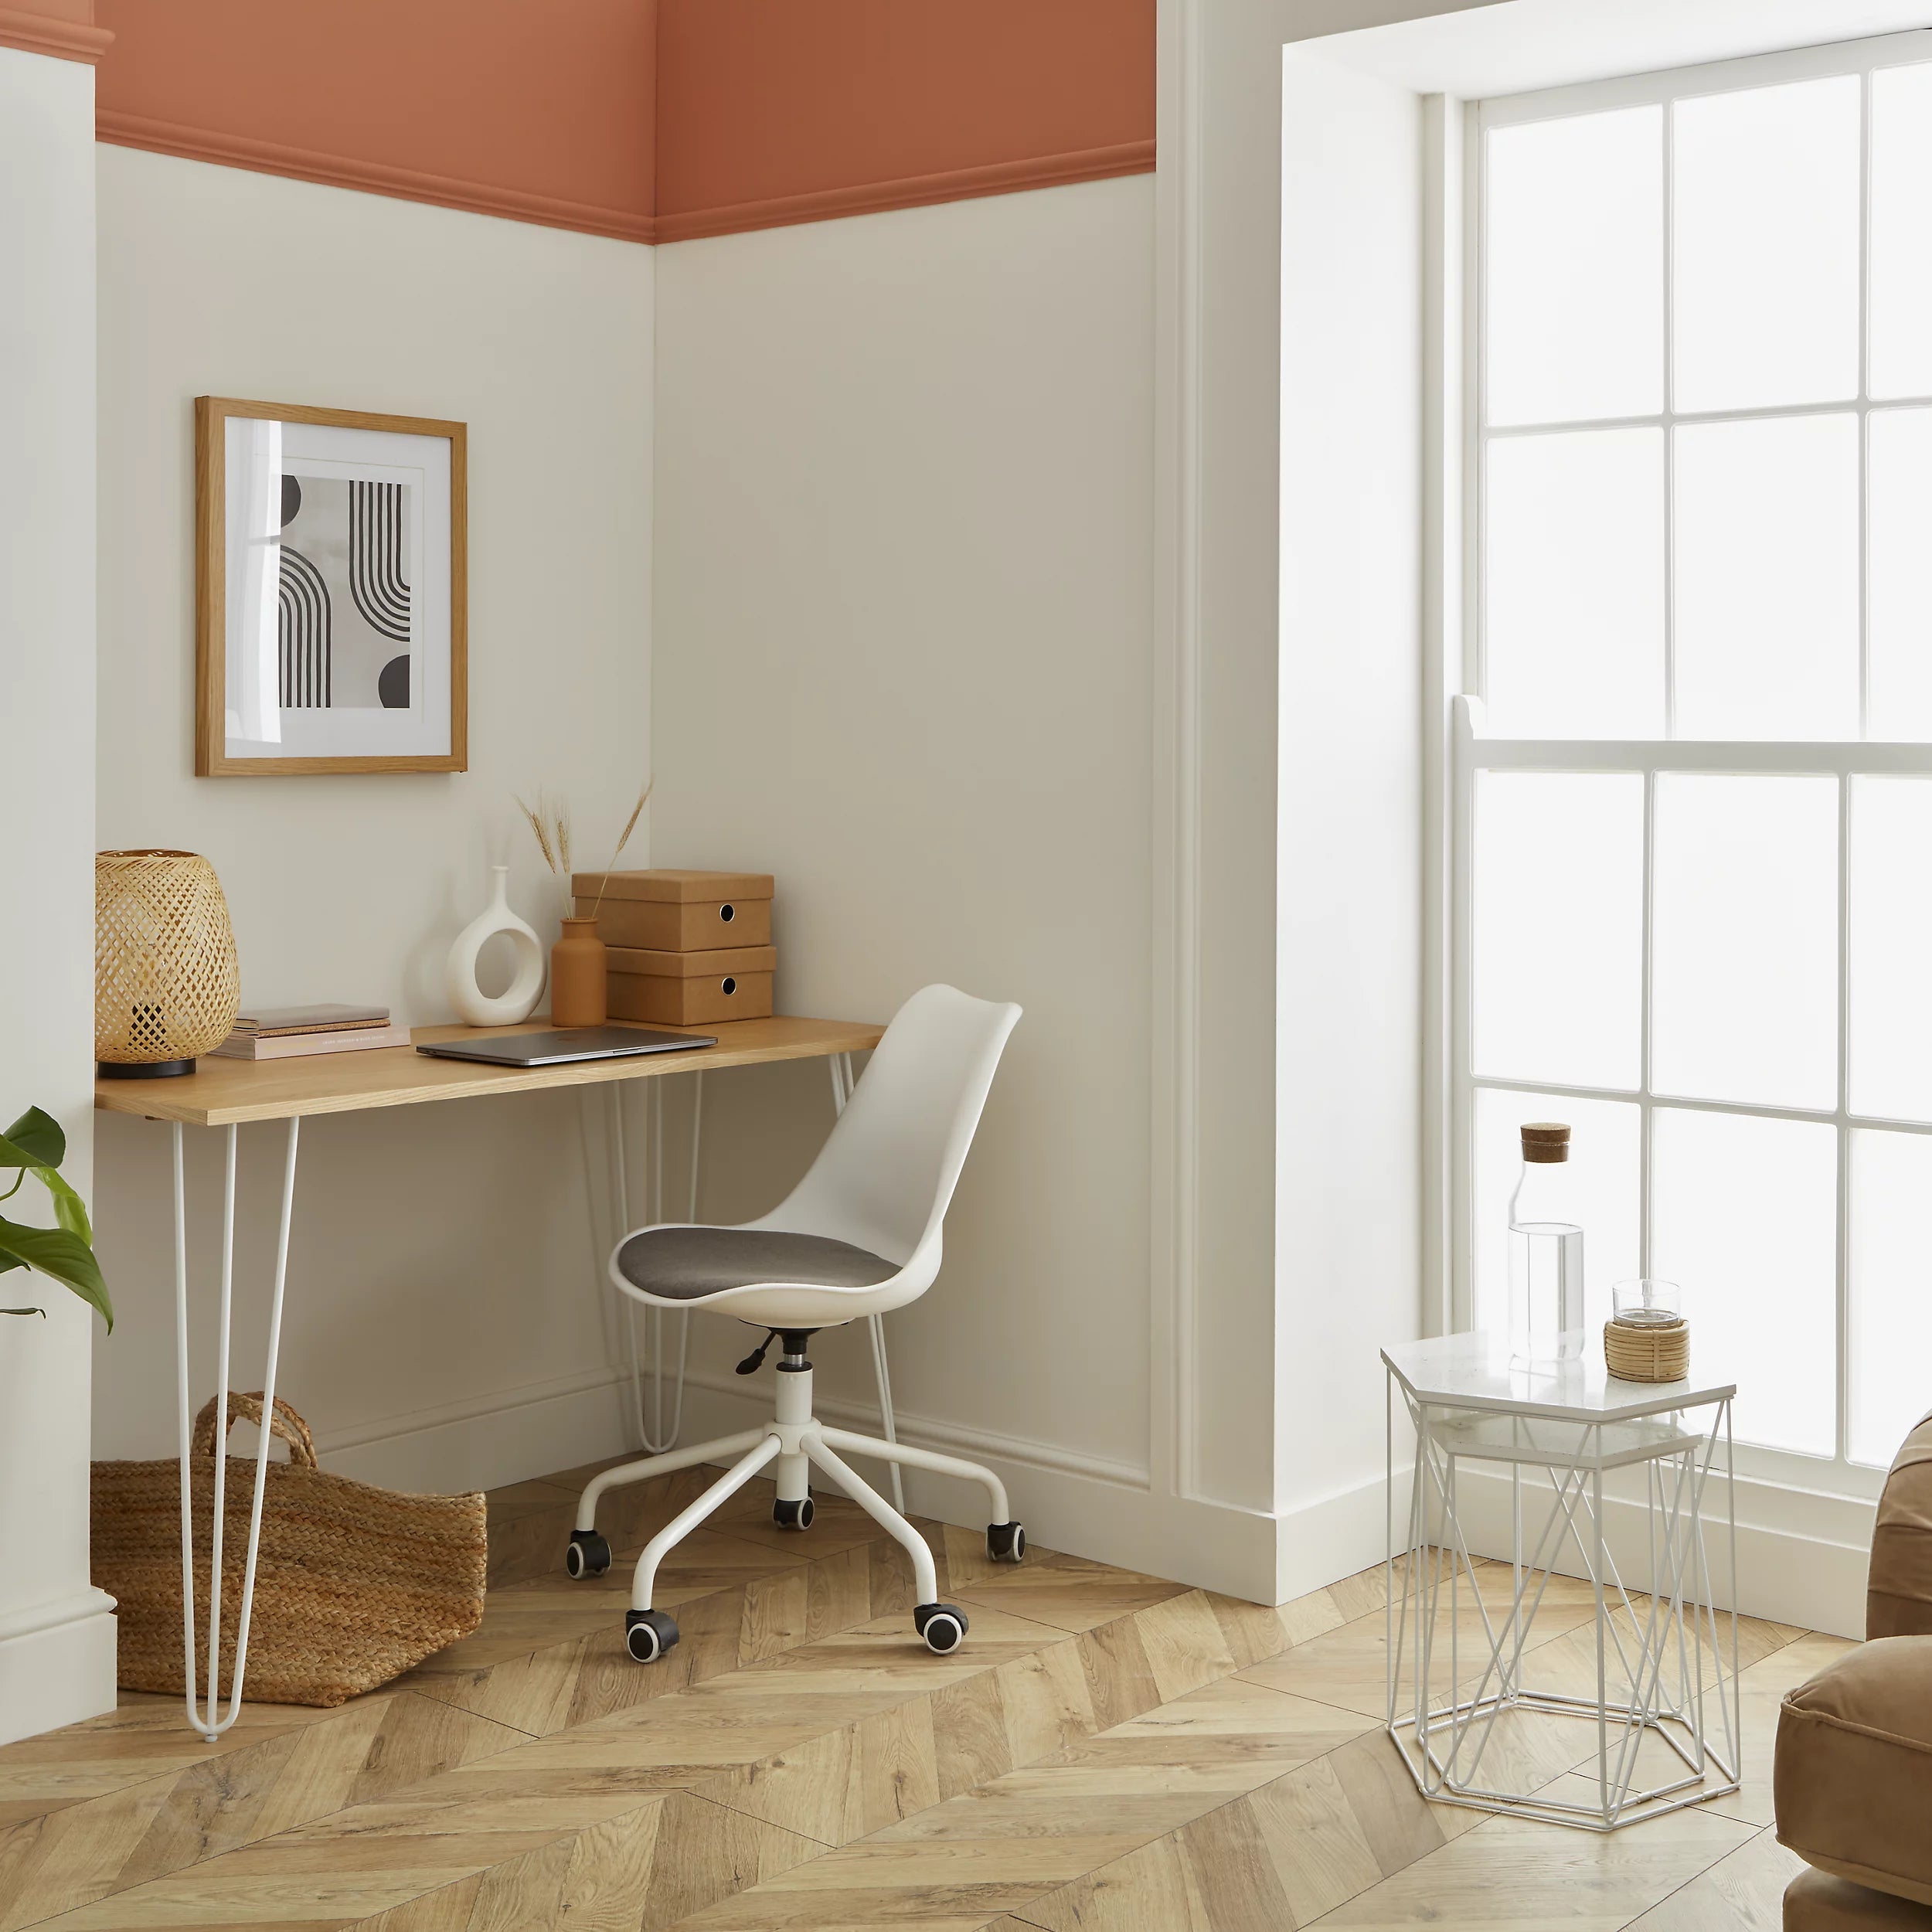 Tivissa White Office chair (H)820mm (W)480mm (D)560mm 0627